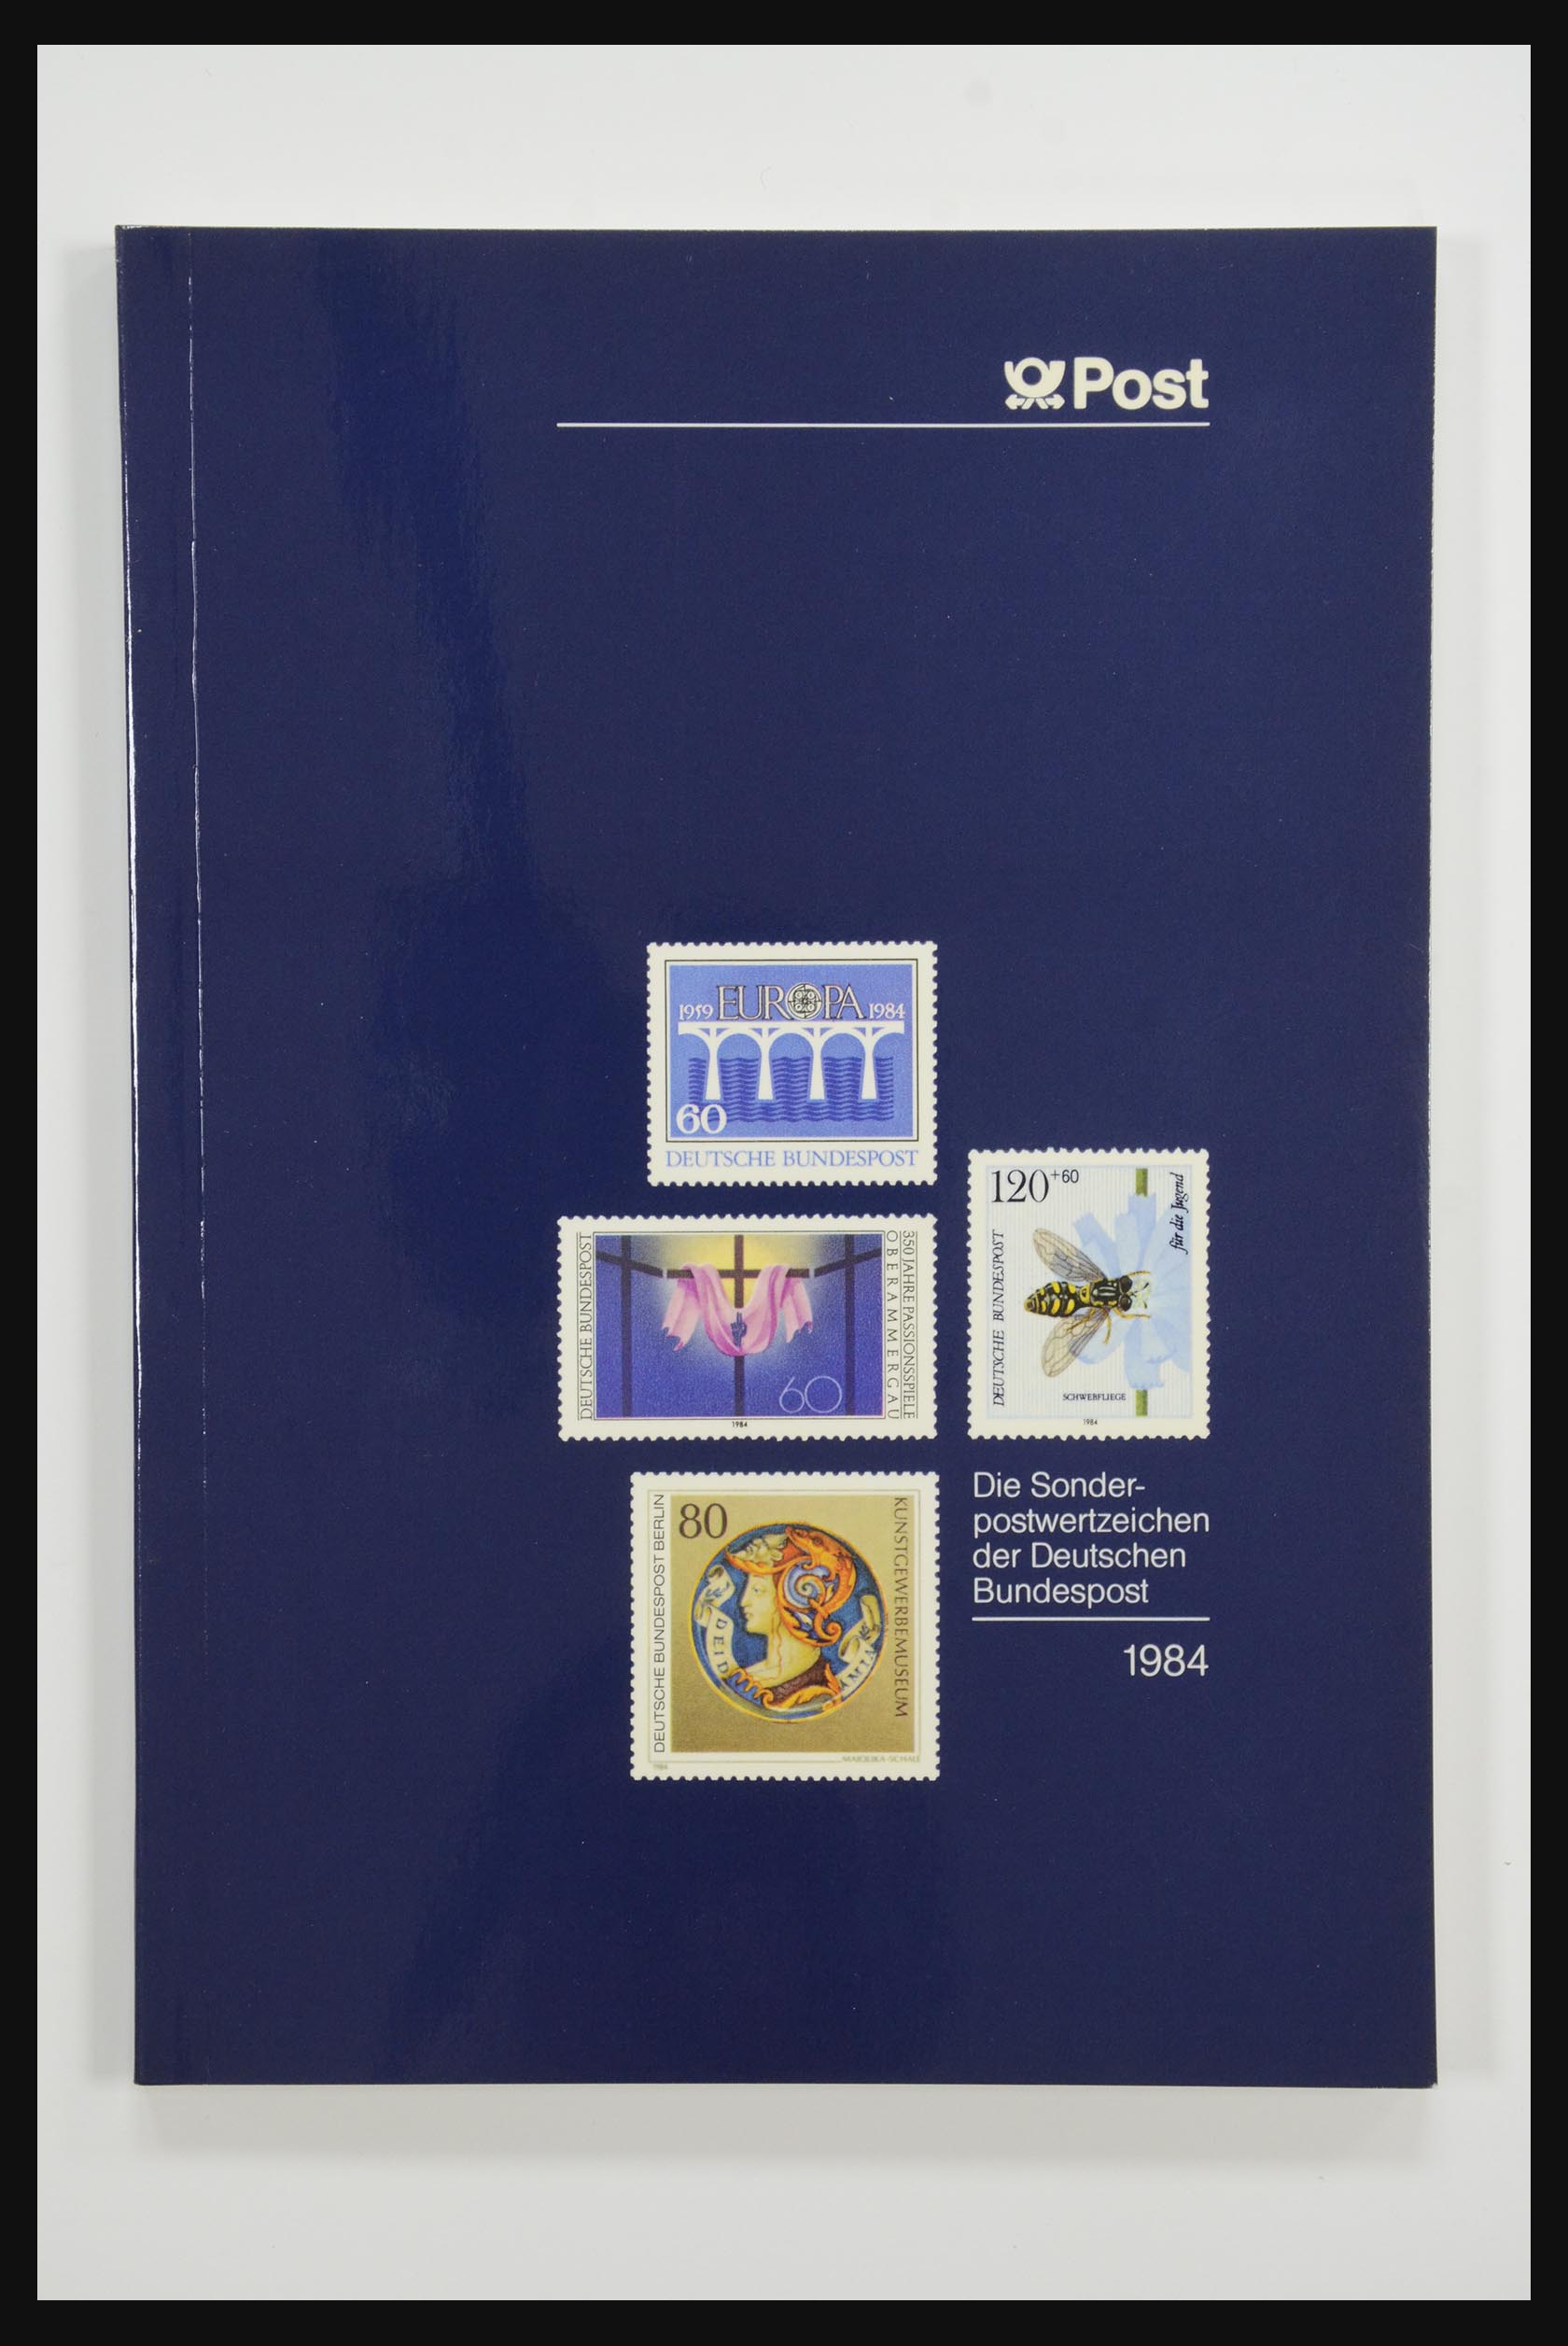 31836 013 - 31836 Bundespost yearbooks 1974-1999.